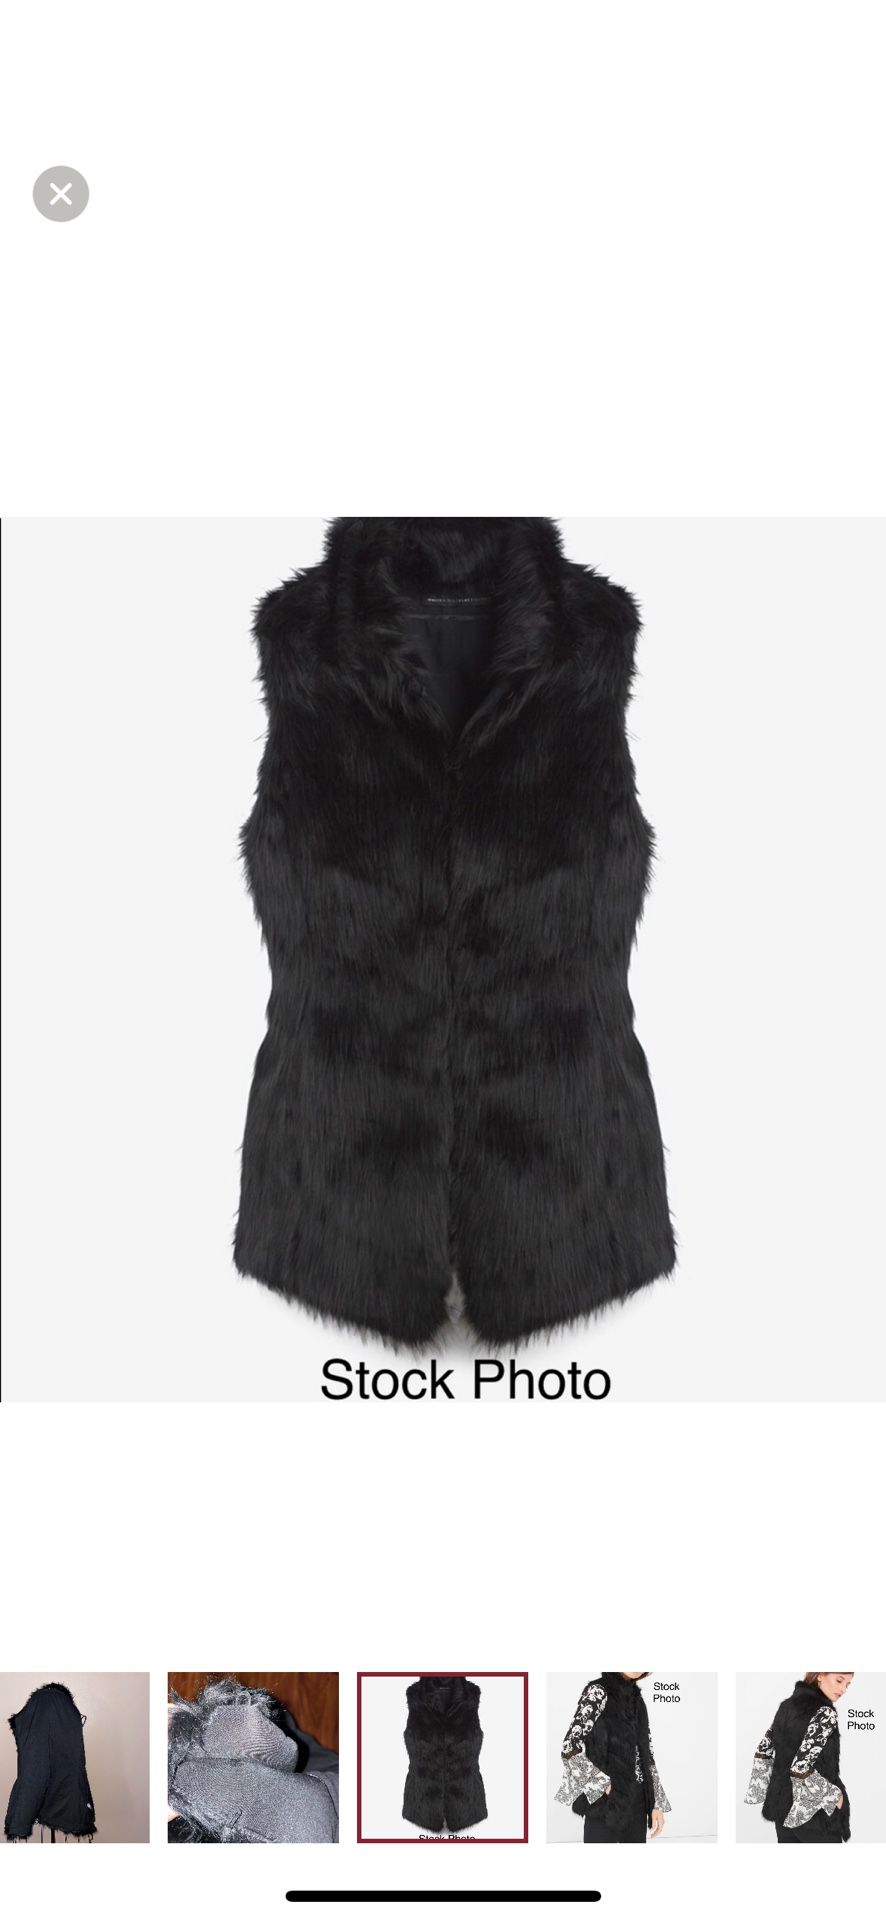 White House Black Market Faux-Fur Vest Style: (contact info removed)26 Size M